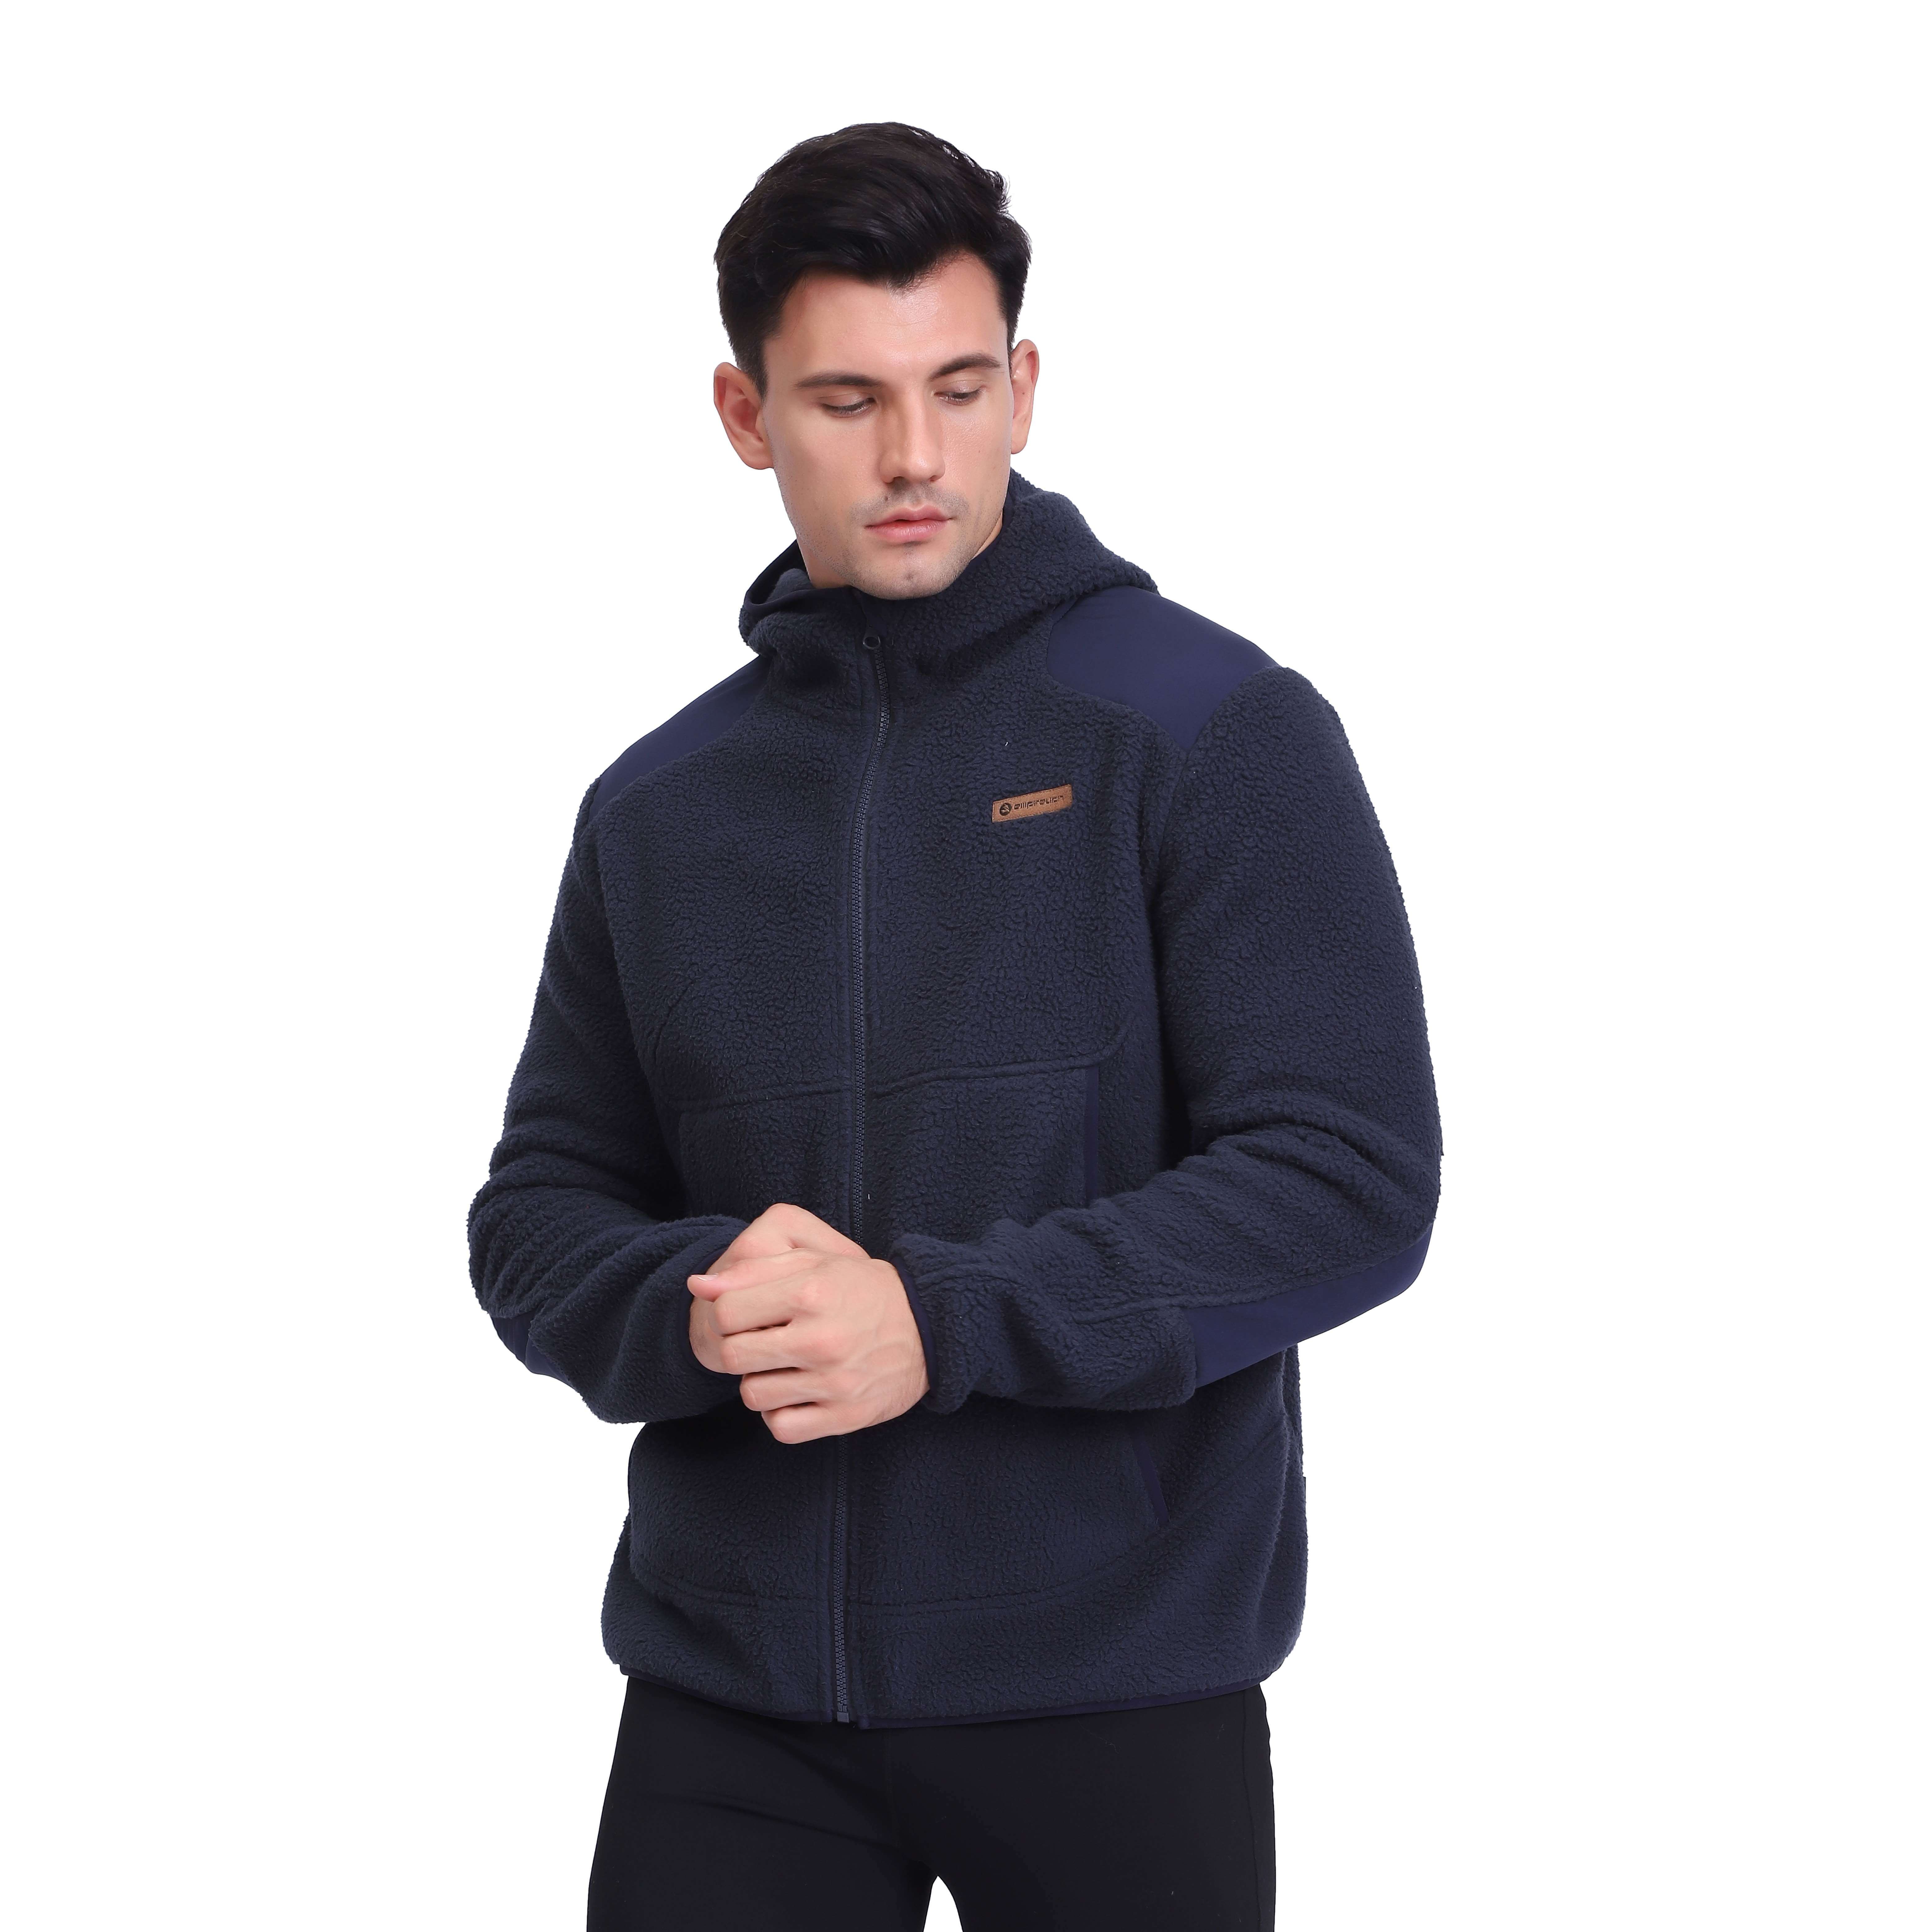 Men's Warm Recycled Polar Fleece Athleticly Stylish Zipper Hoodie